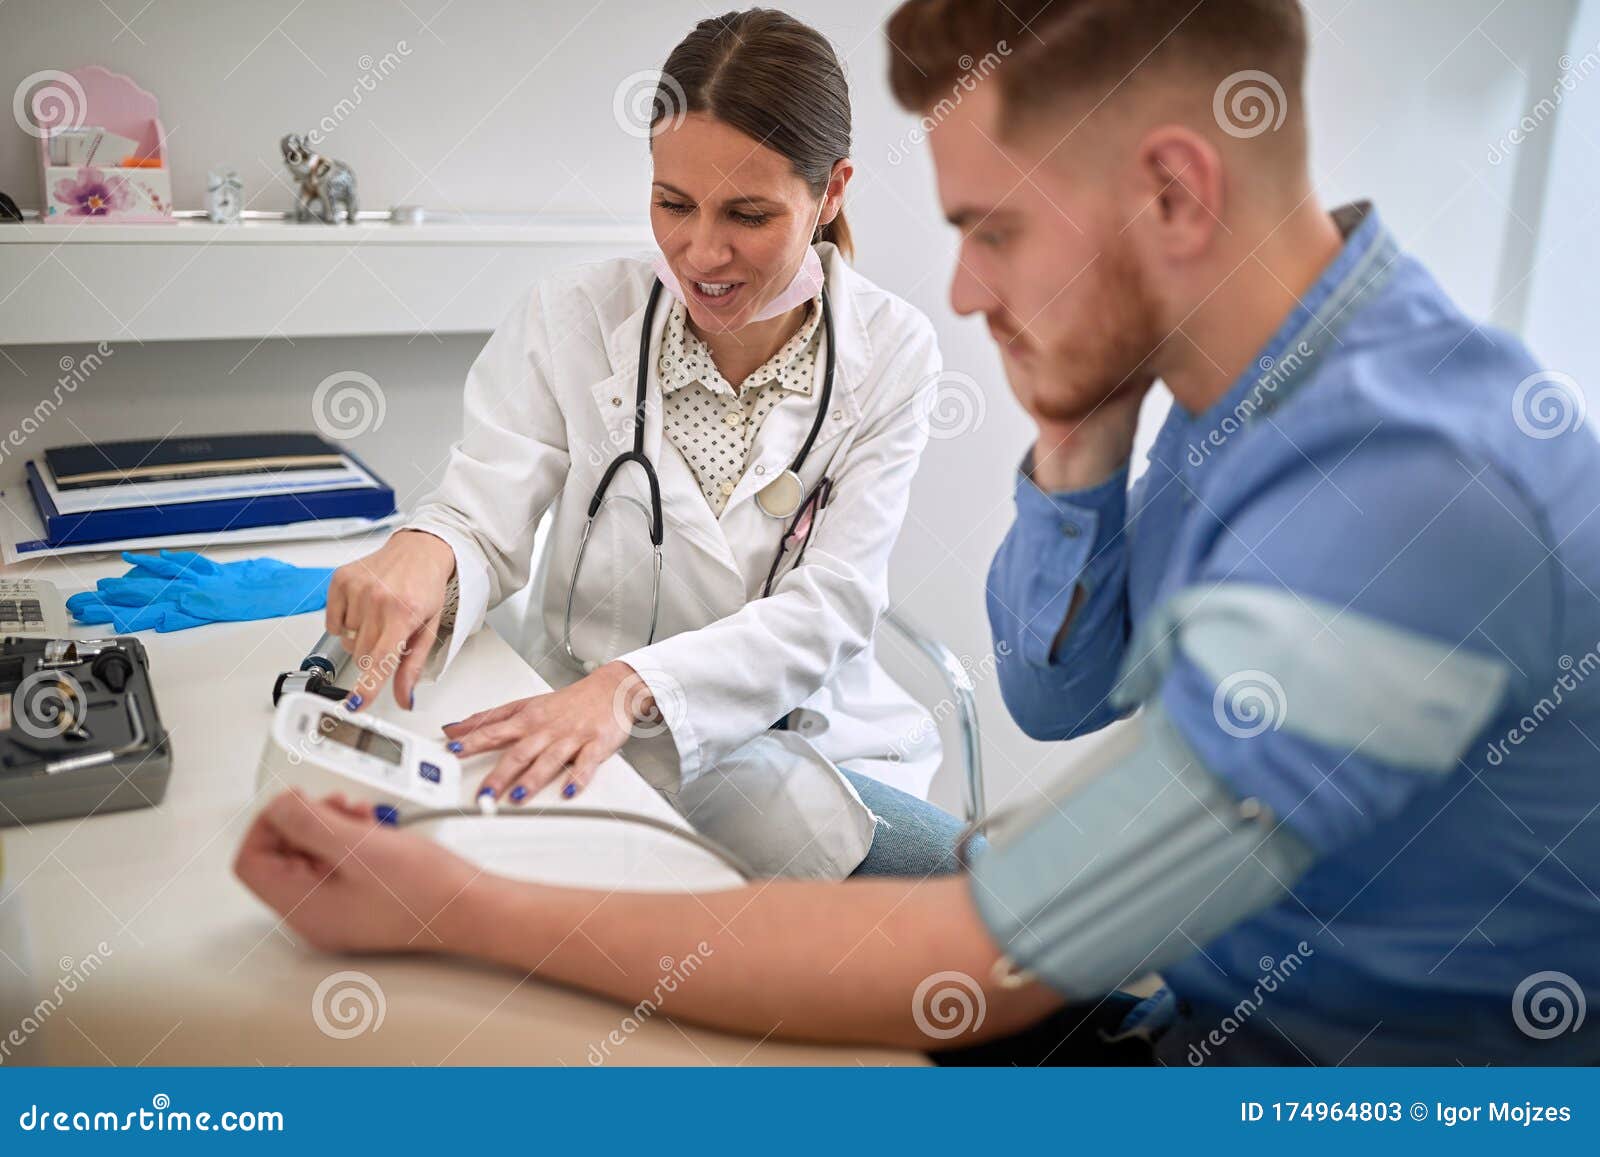 Female Doctor Measuring Blood Pressure Stock Image - Image 